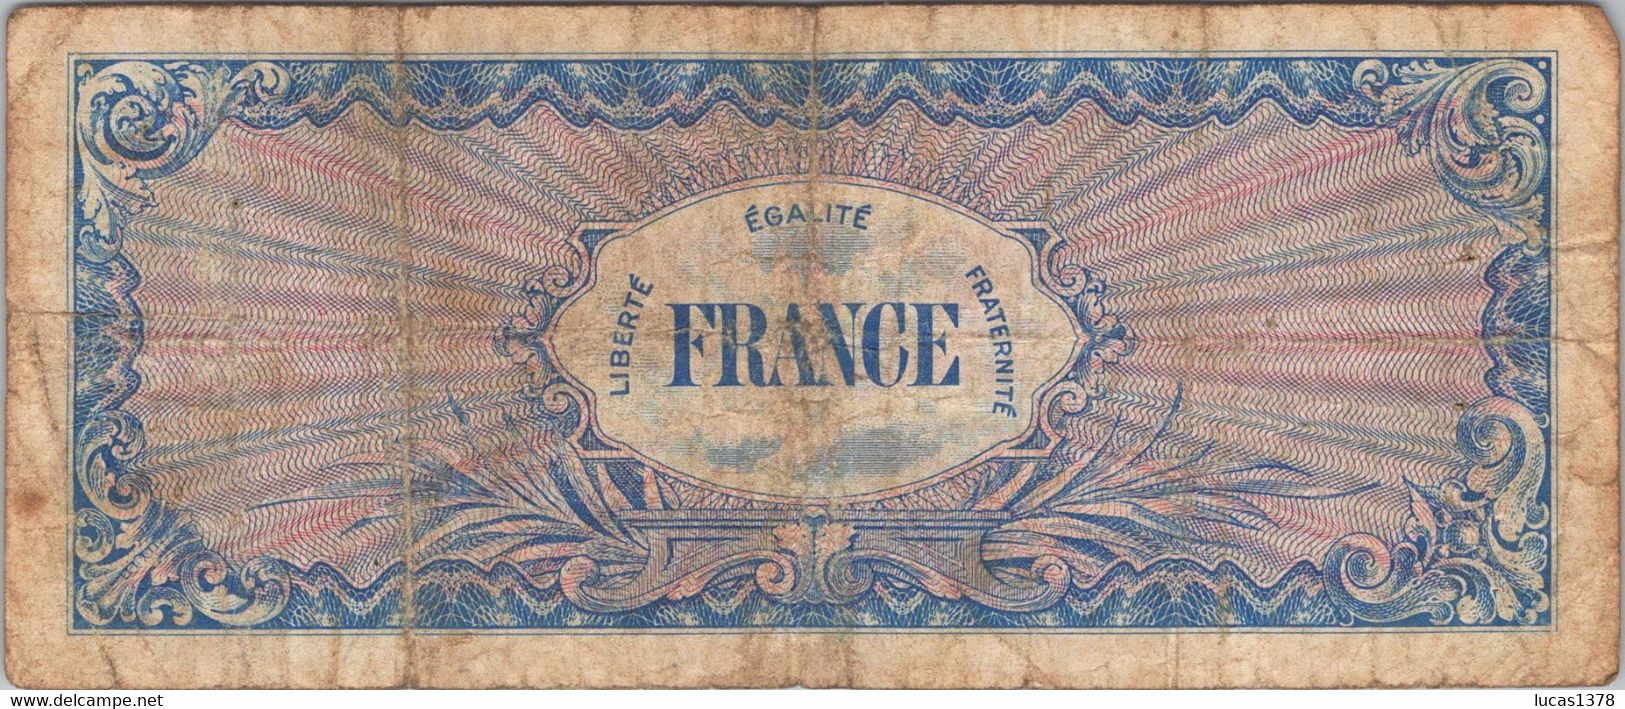 - FRANCE - BILLET - TRESOR - DRAPEAU FRANCE - 50 F - SERIE DE 1944 - N° 43214200 - 1944 Flagge/Frankreich